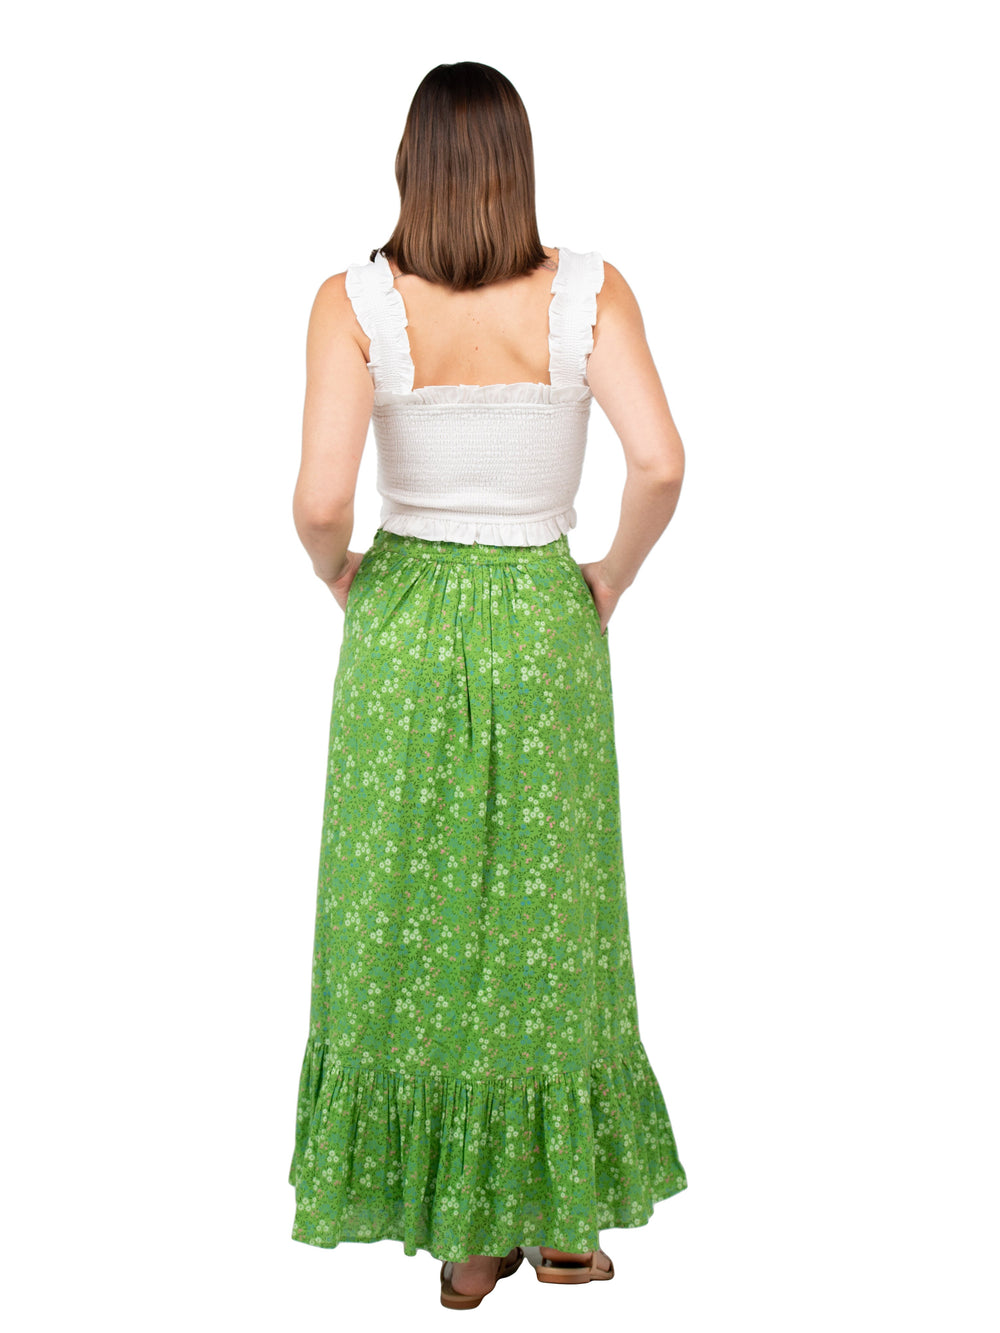 Beau & Ro Apparel The Britt Skirt | Green Petite Floral